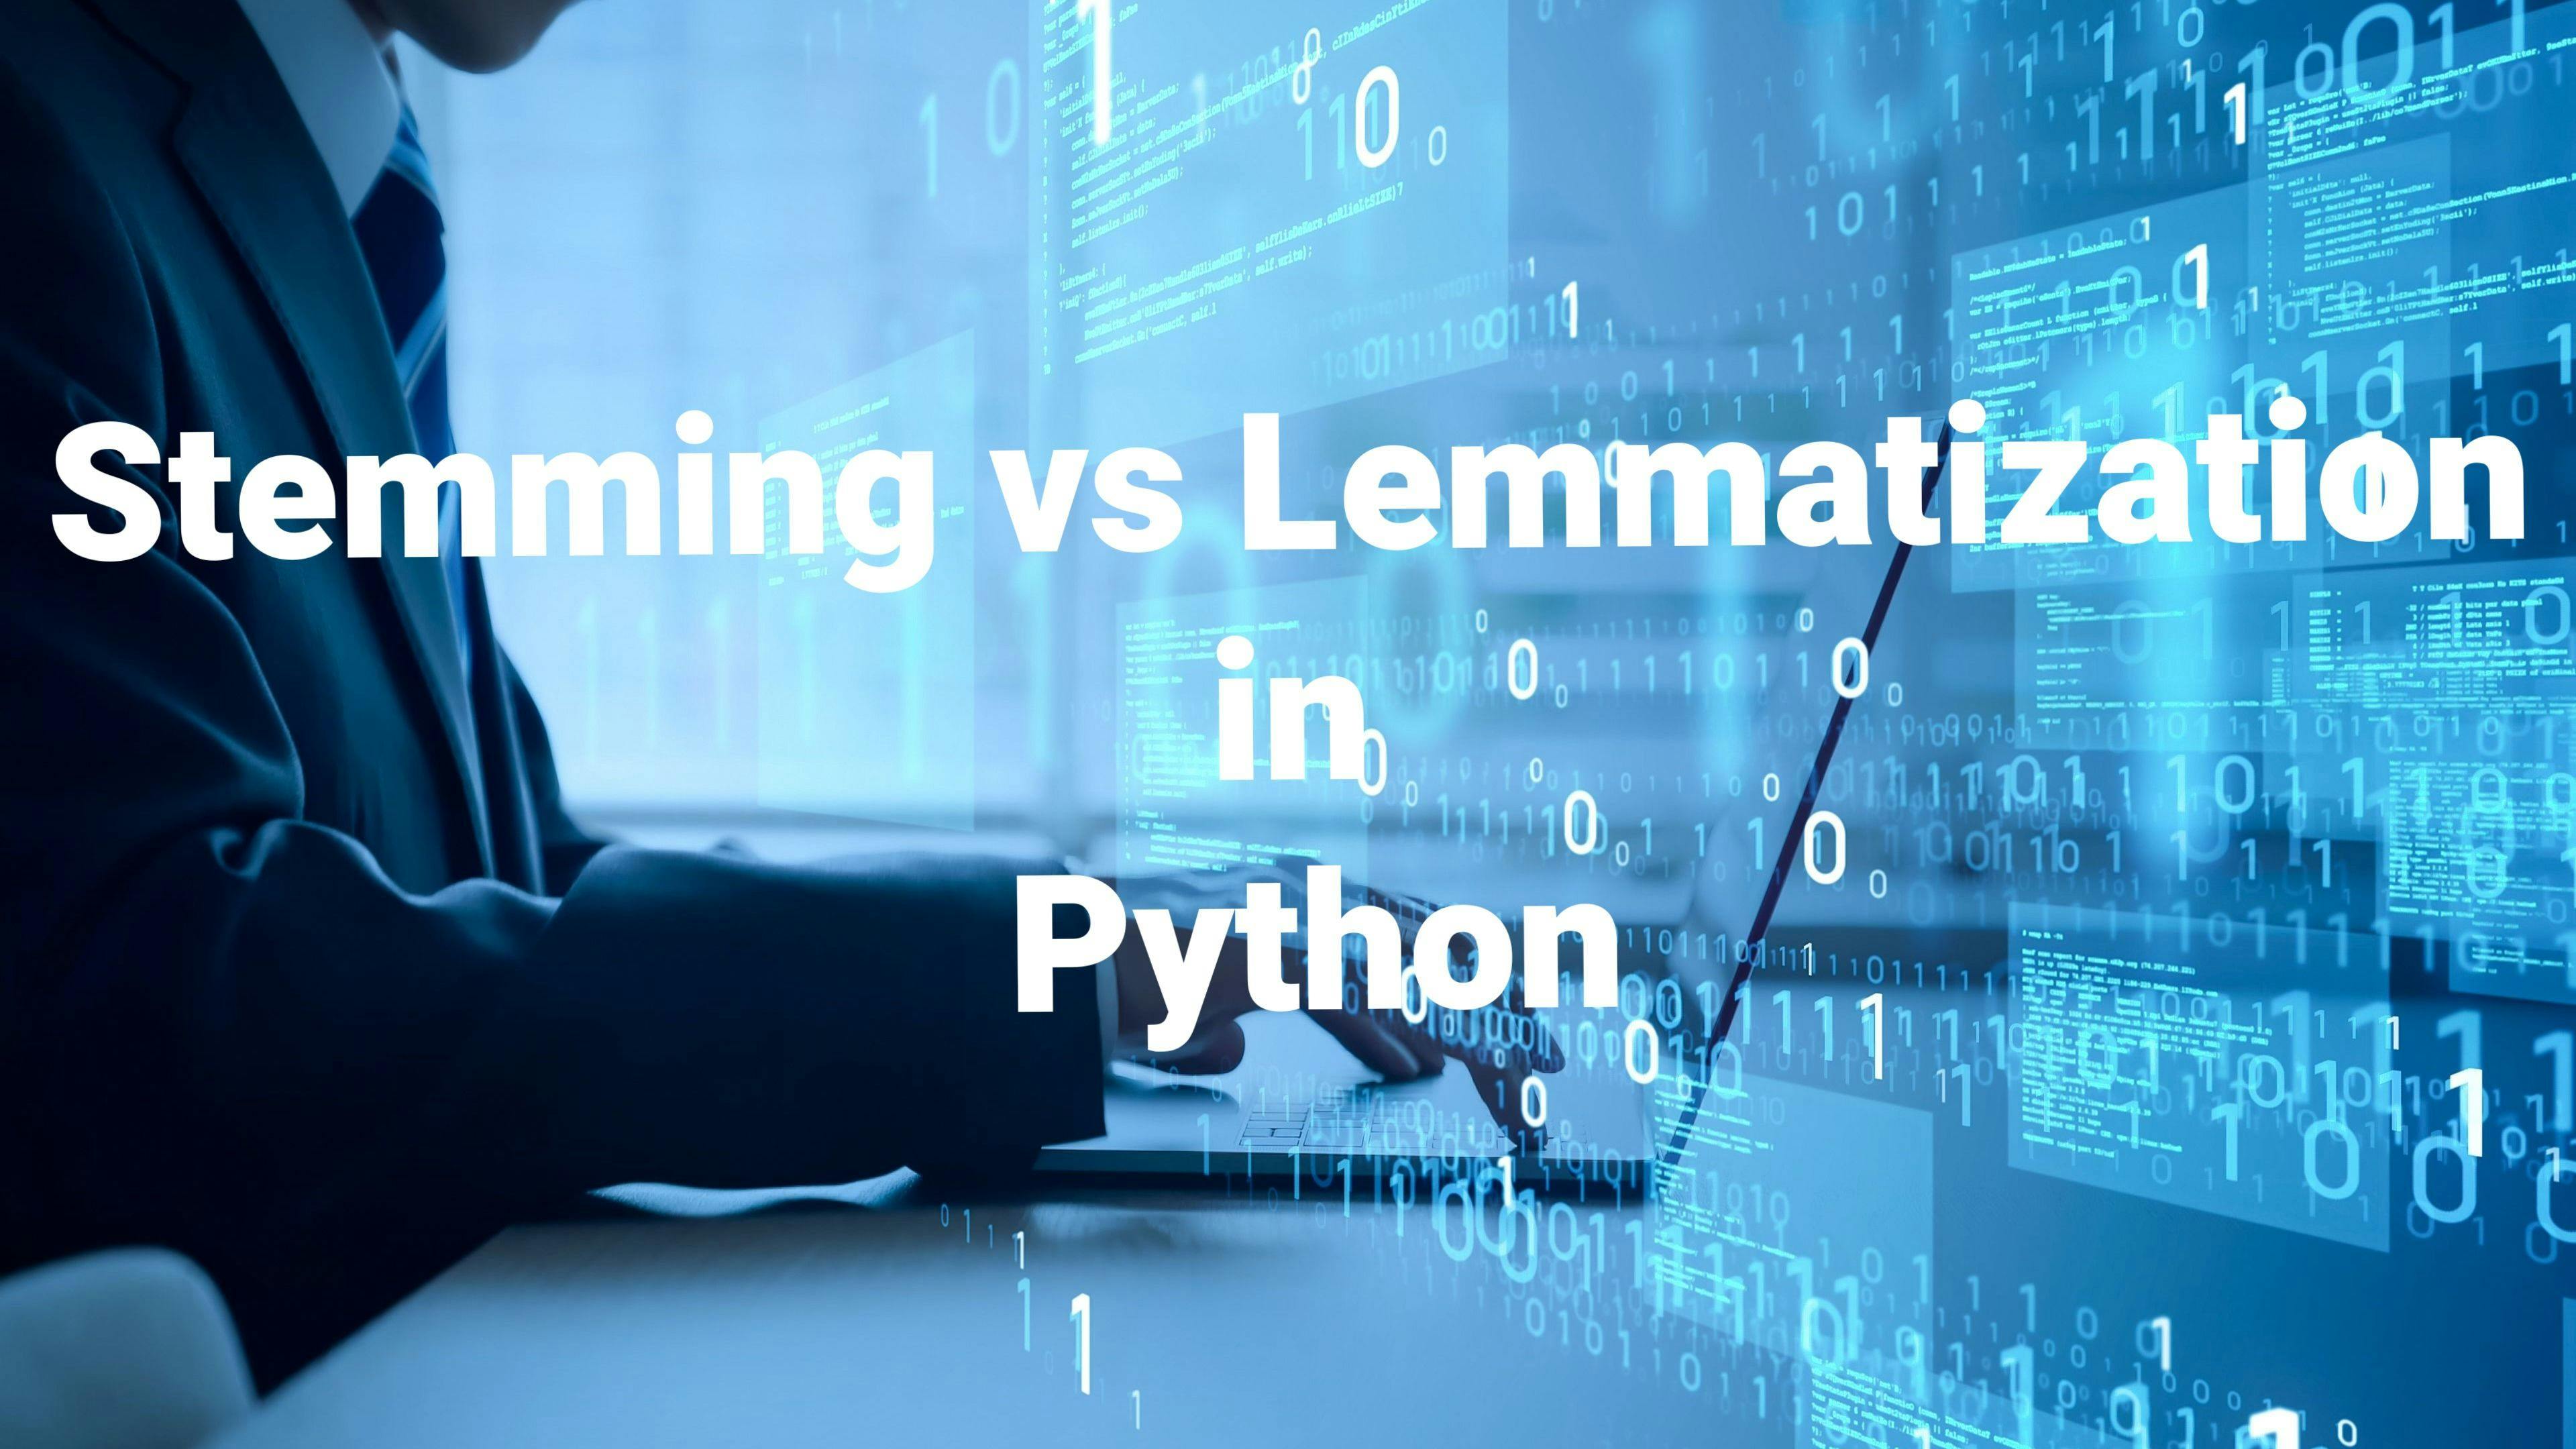 Stemming vs Lemmatization in Python